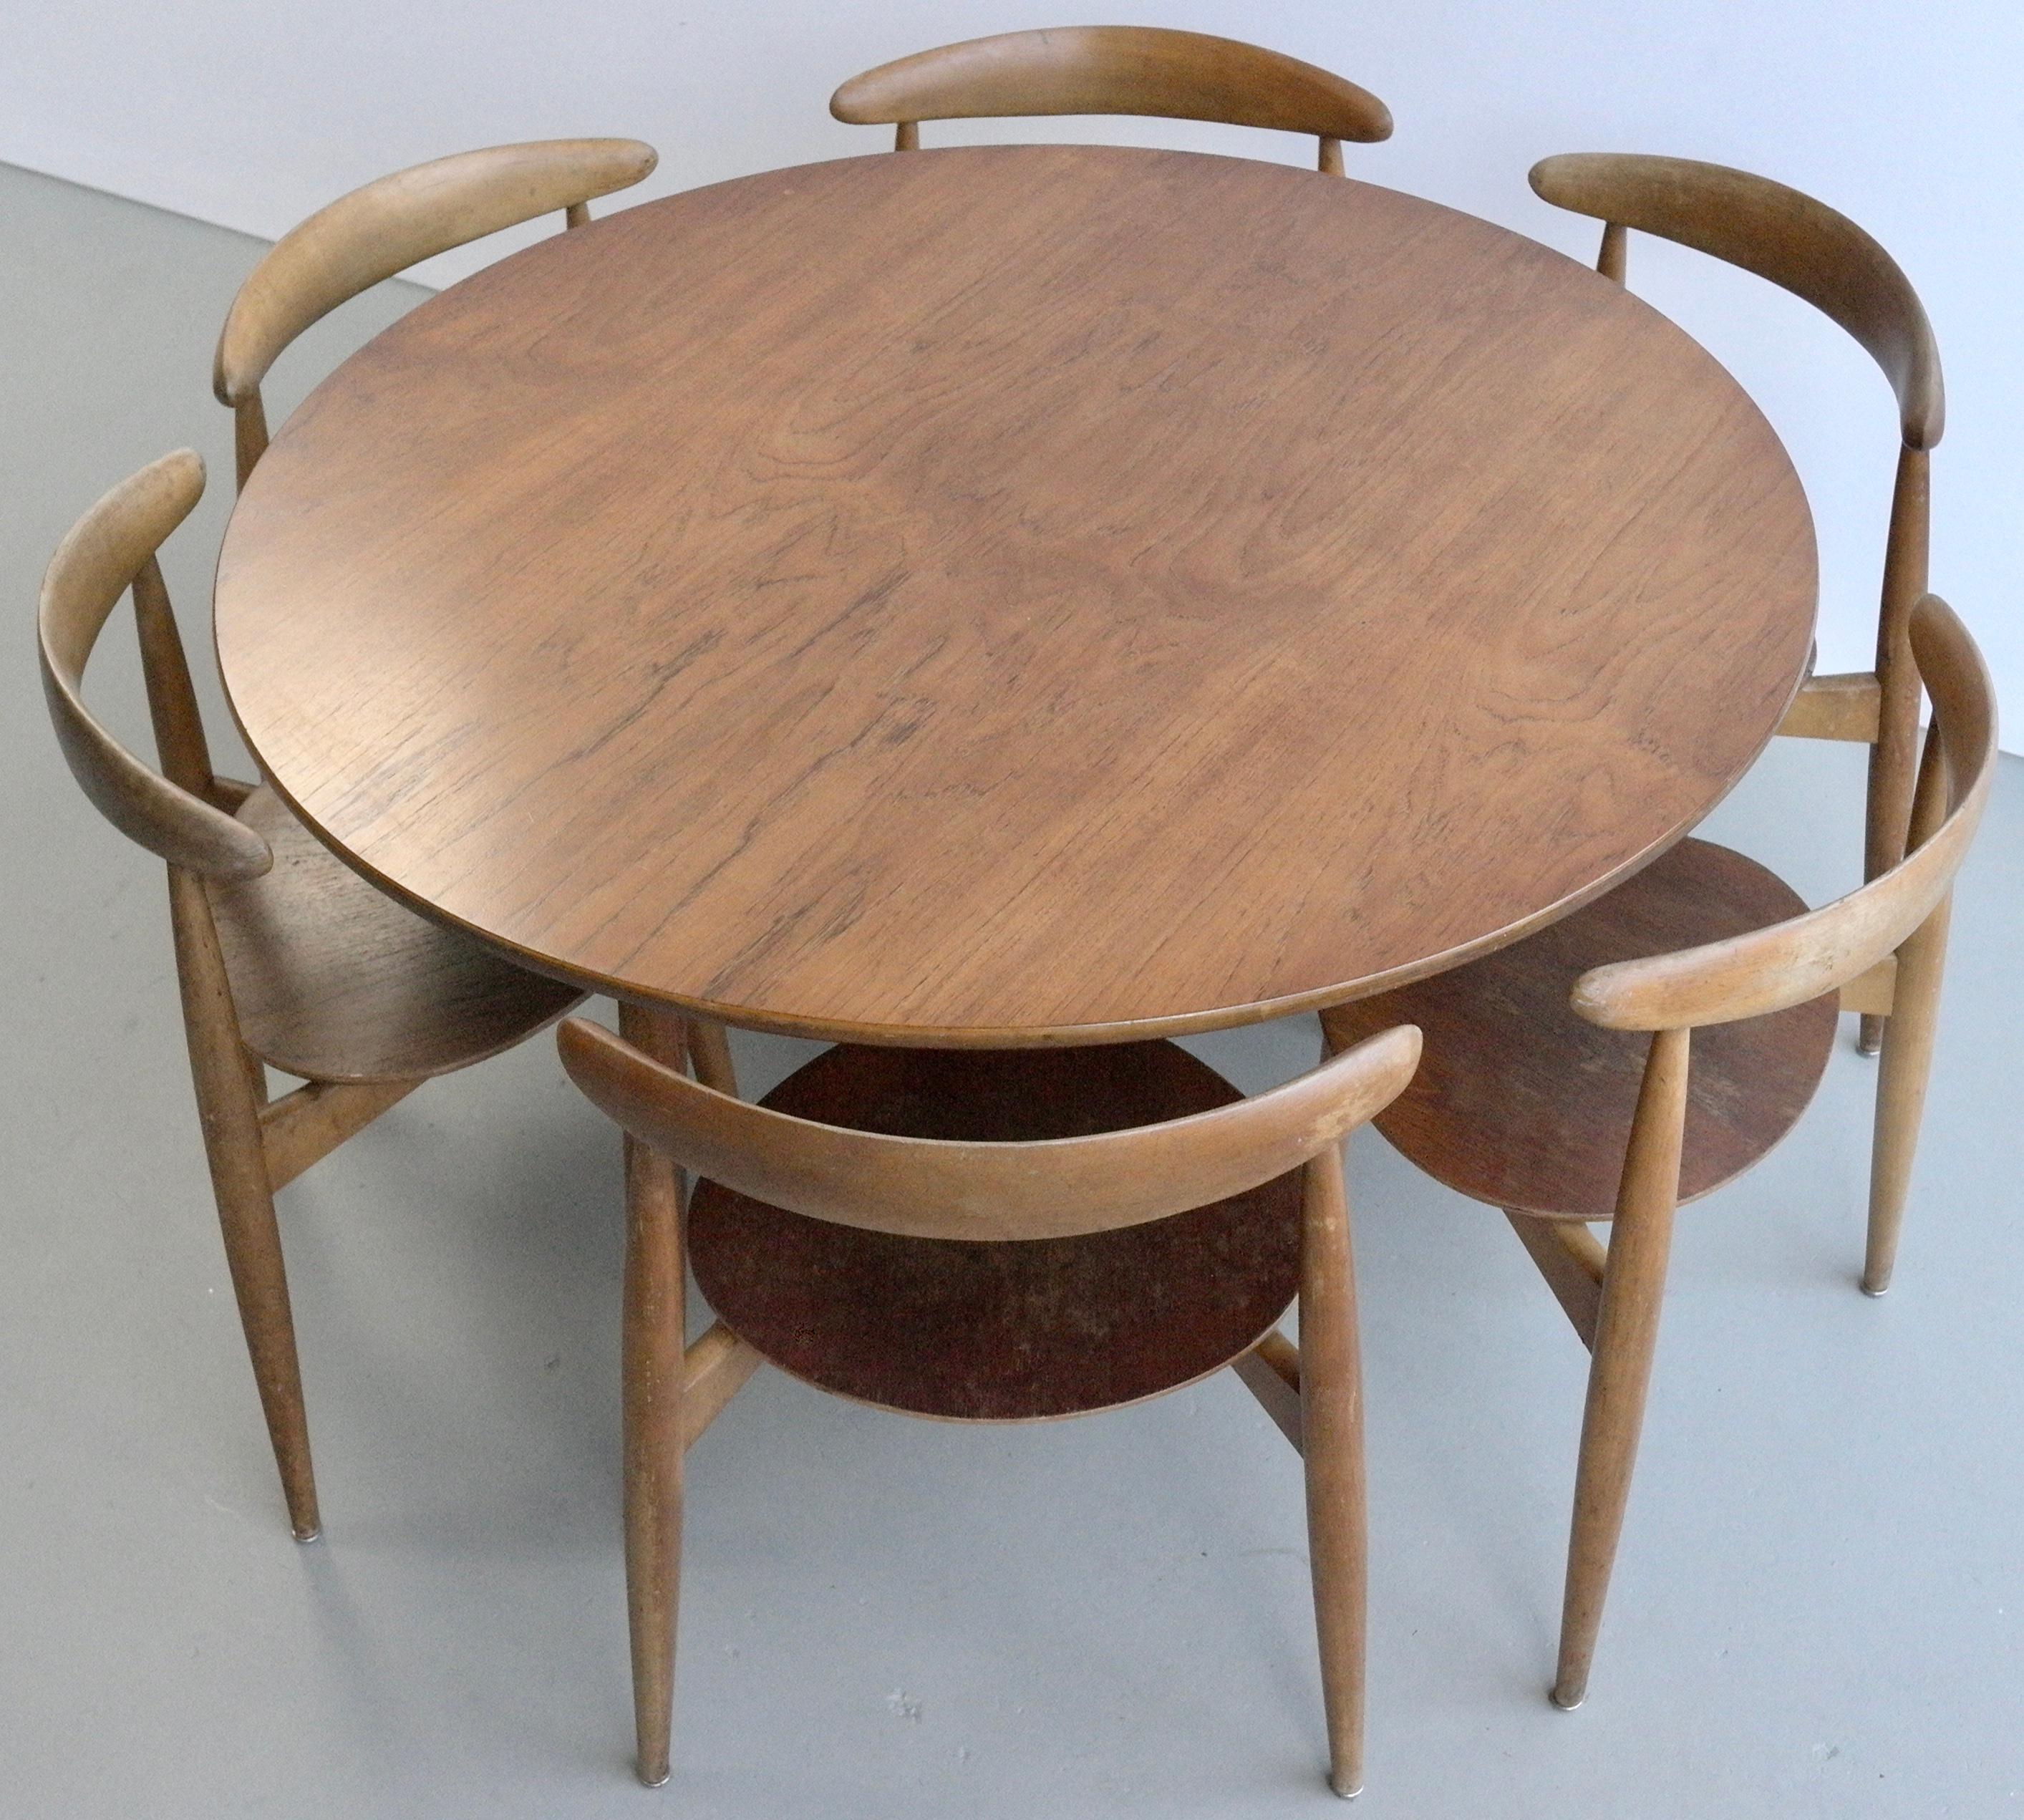 Hans Wegner dining table and six heart-shaped chairs Fritz Hansen, Denmark, 1950s.